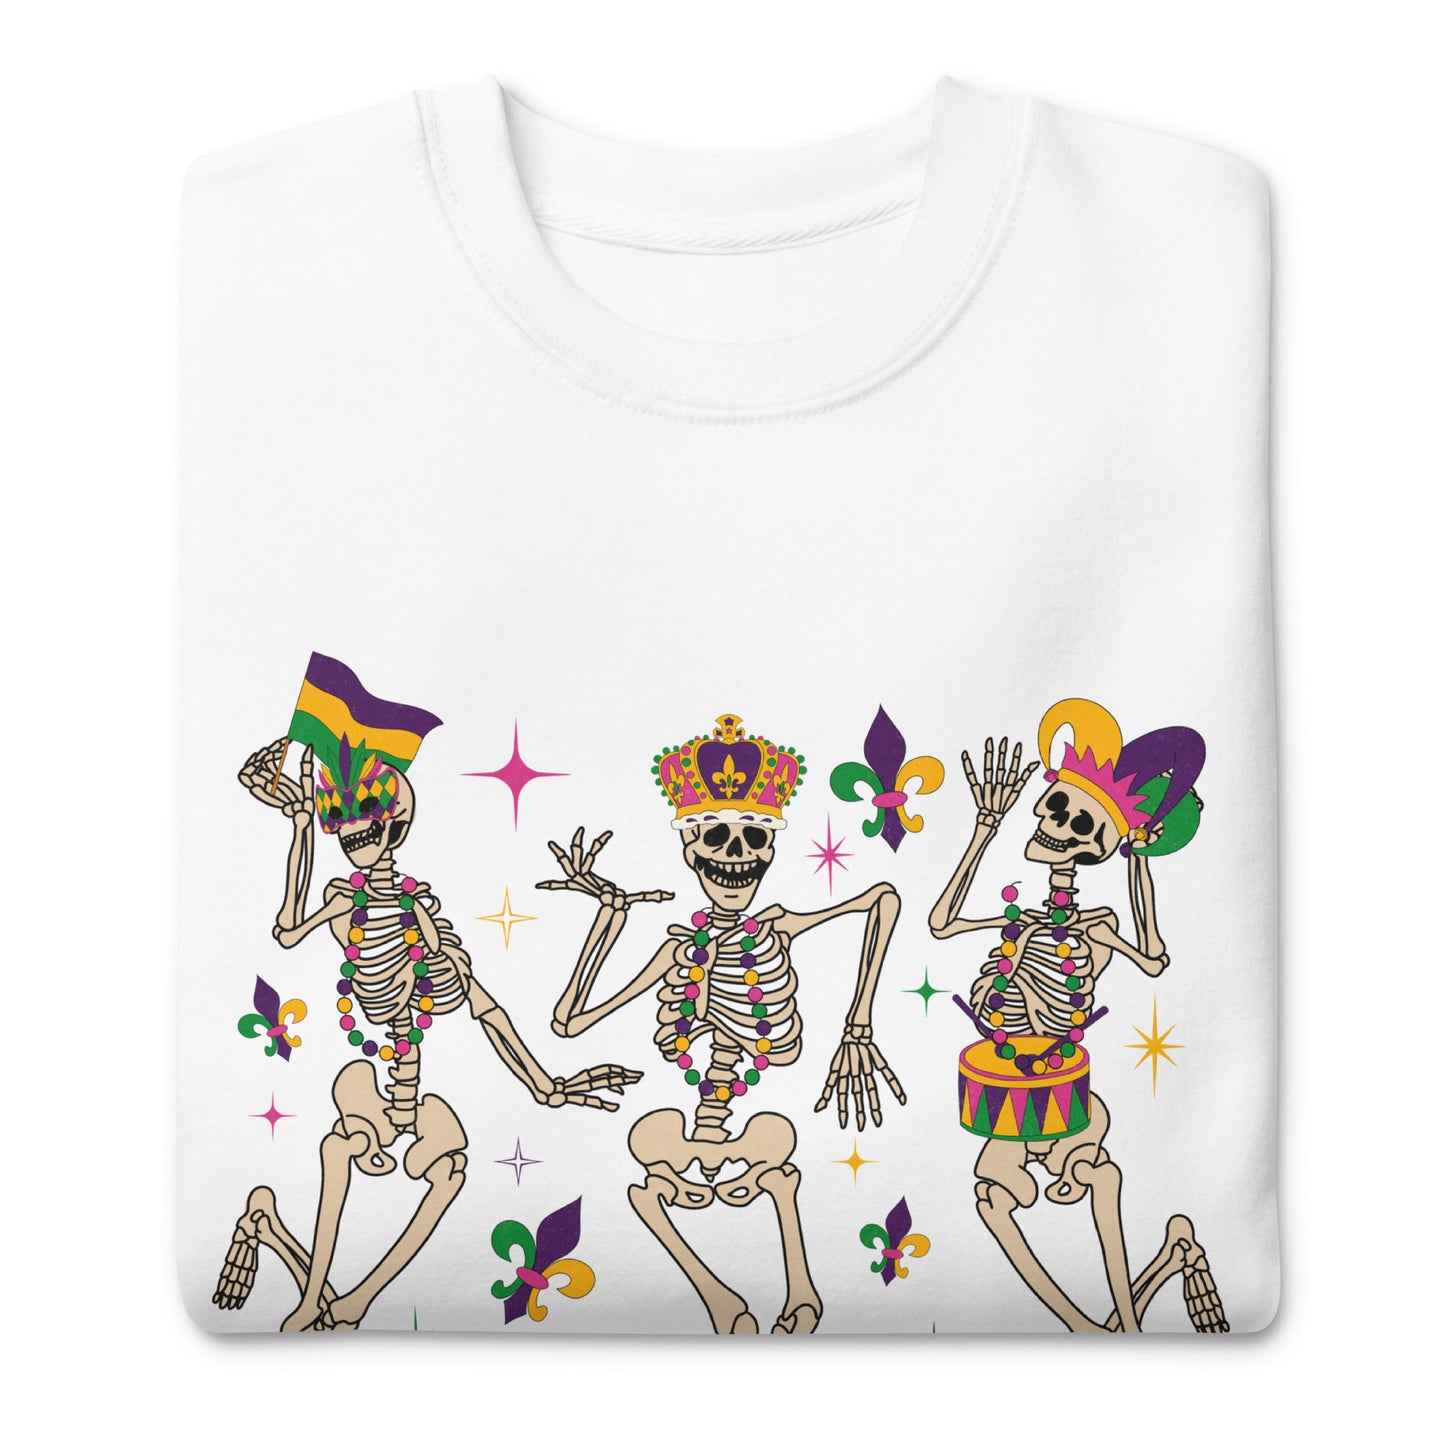 Dancing Skeletons - Mardi Gras - Unisex Premium Sweatshirt